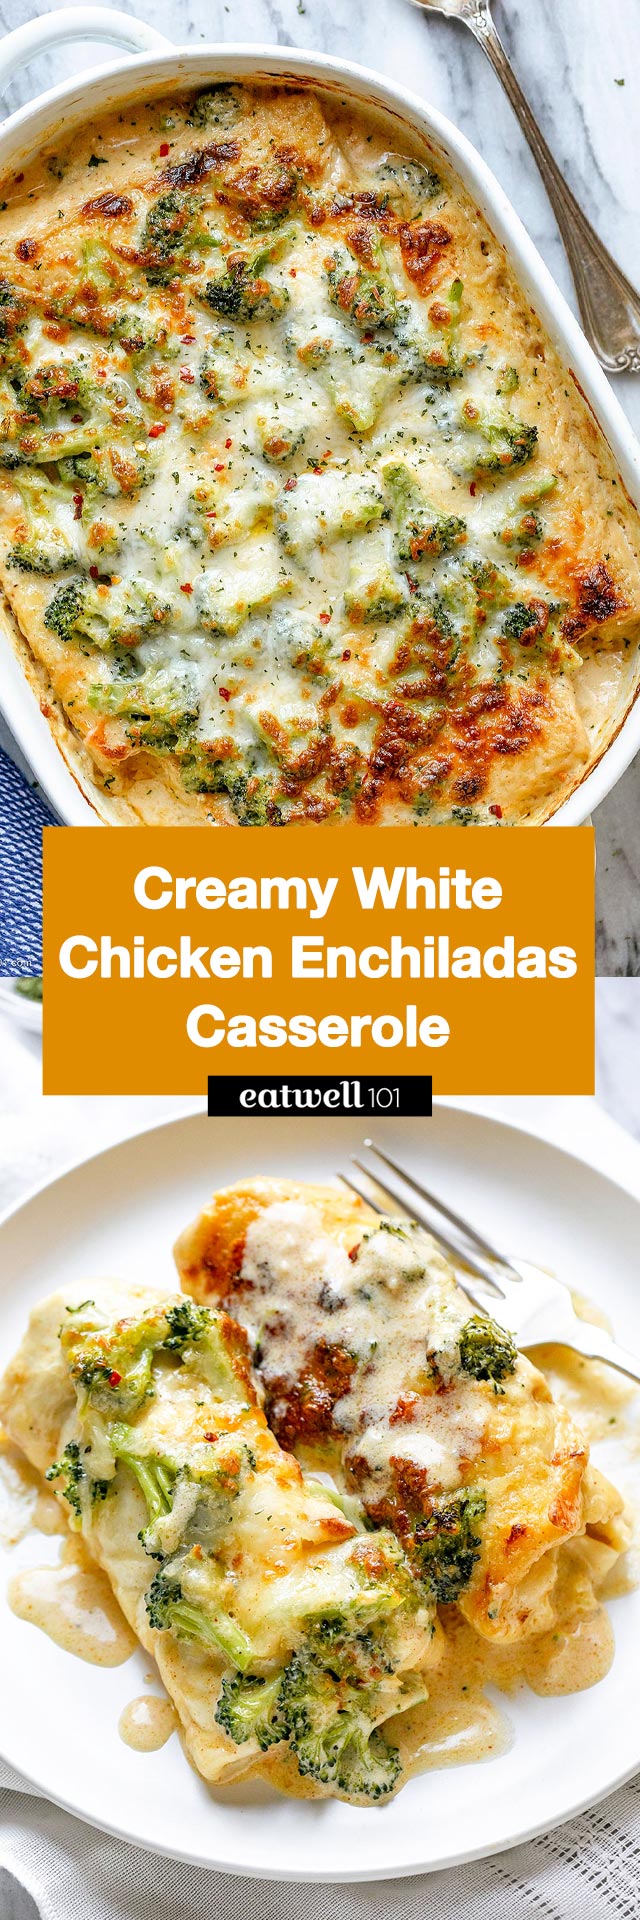 Creamy Chicken Enchiladas Casserole Recipe - #chicken #enchiladas #recipe #eatwell101 - Make dinner easier with our chicken enchiladas recipe. These creamy chicken enchiladas are guaranteed to please even the pickiest eaters!